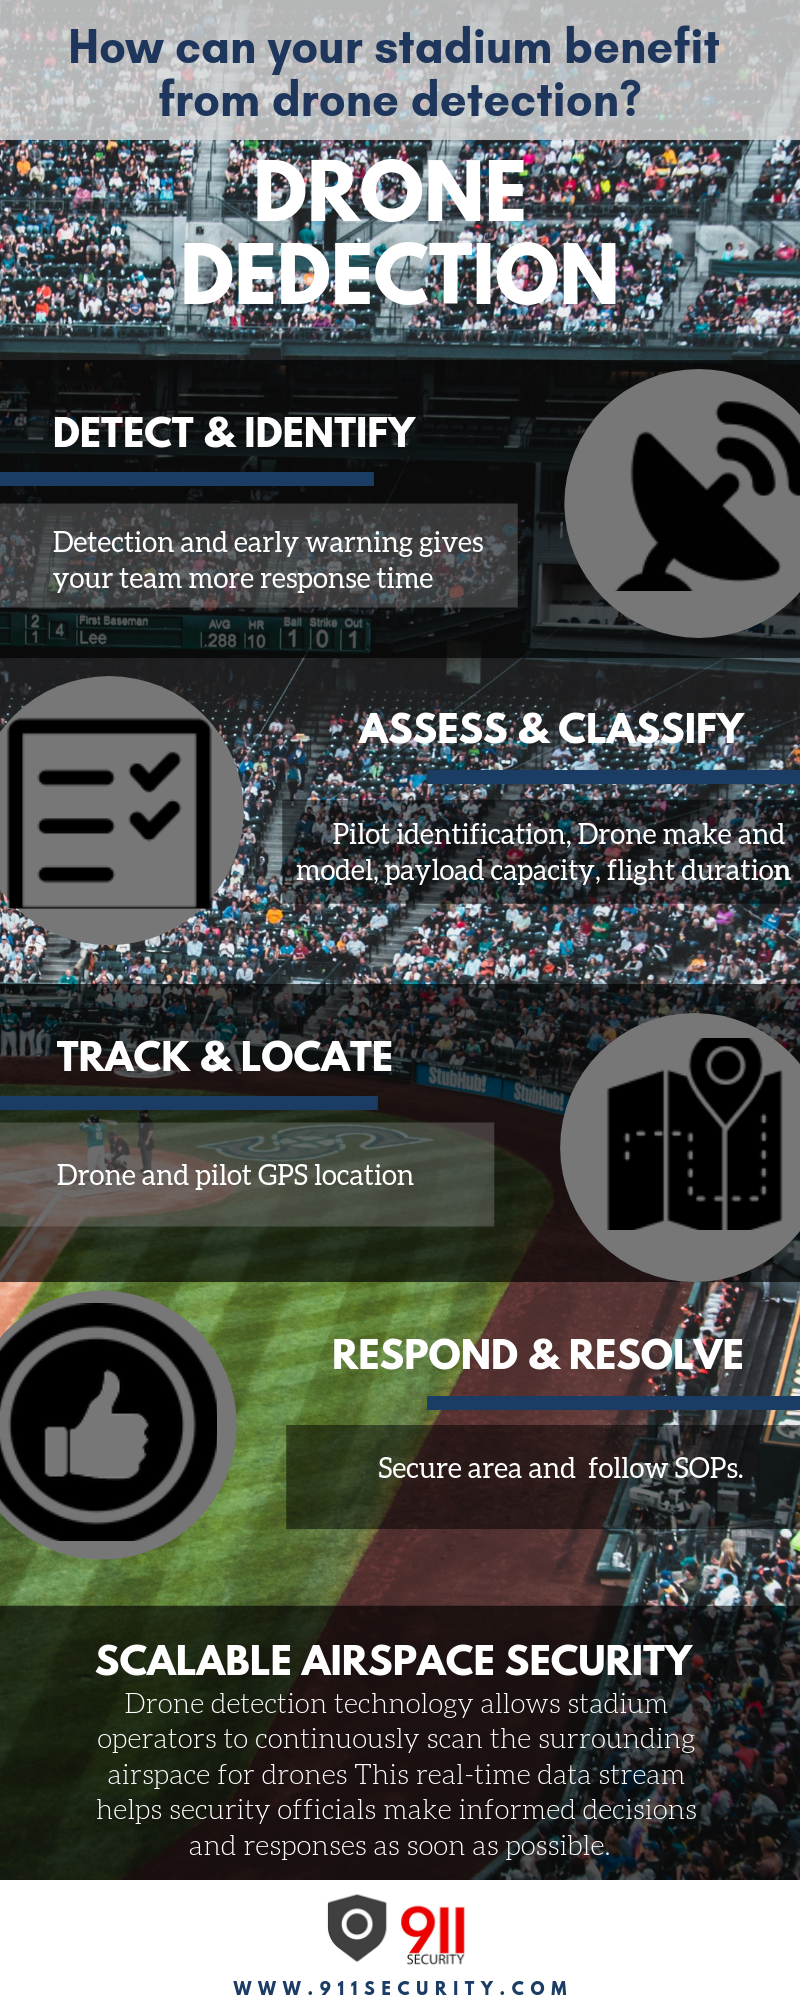 Stadium Security Drone Detection Benefits Infographic